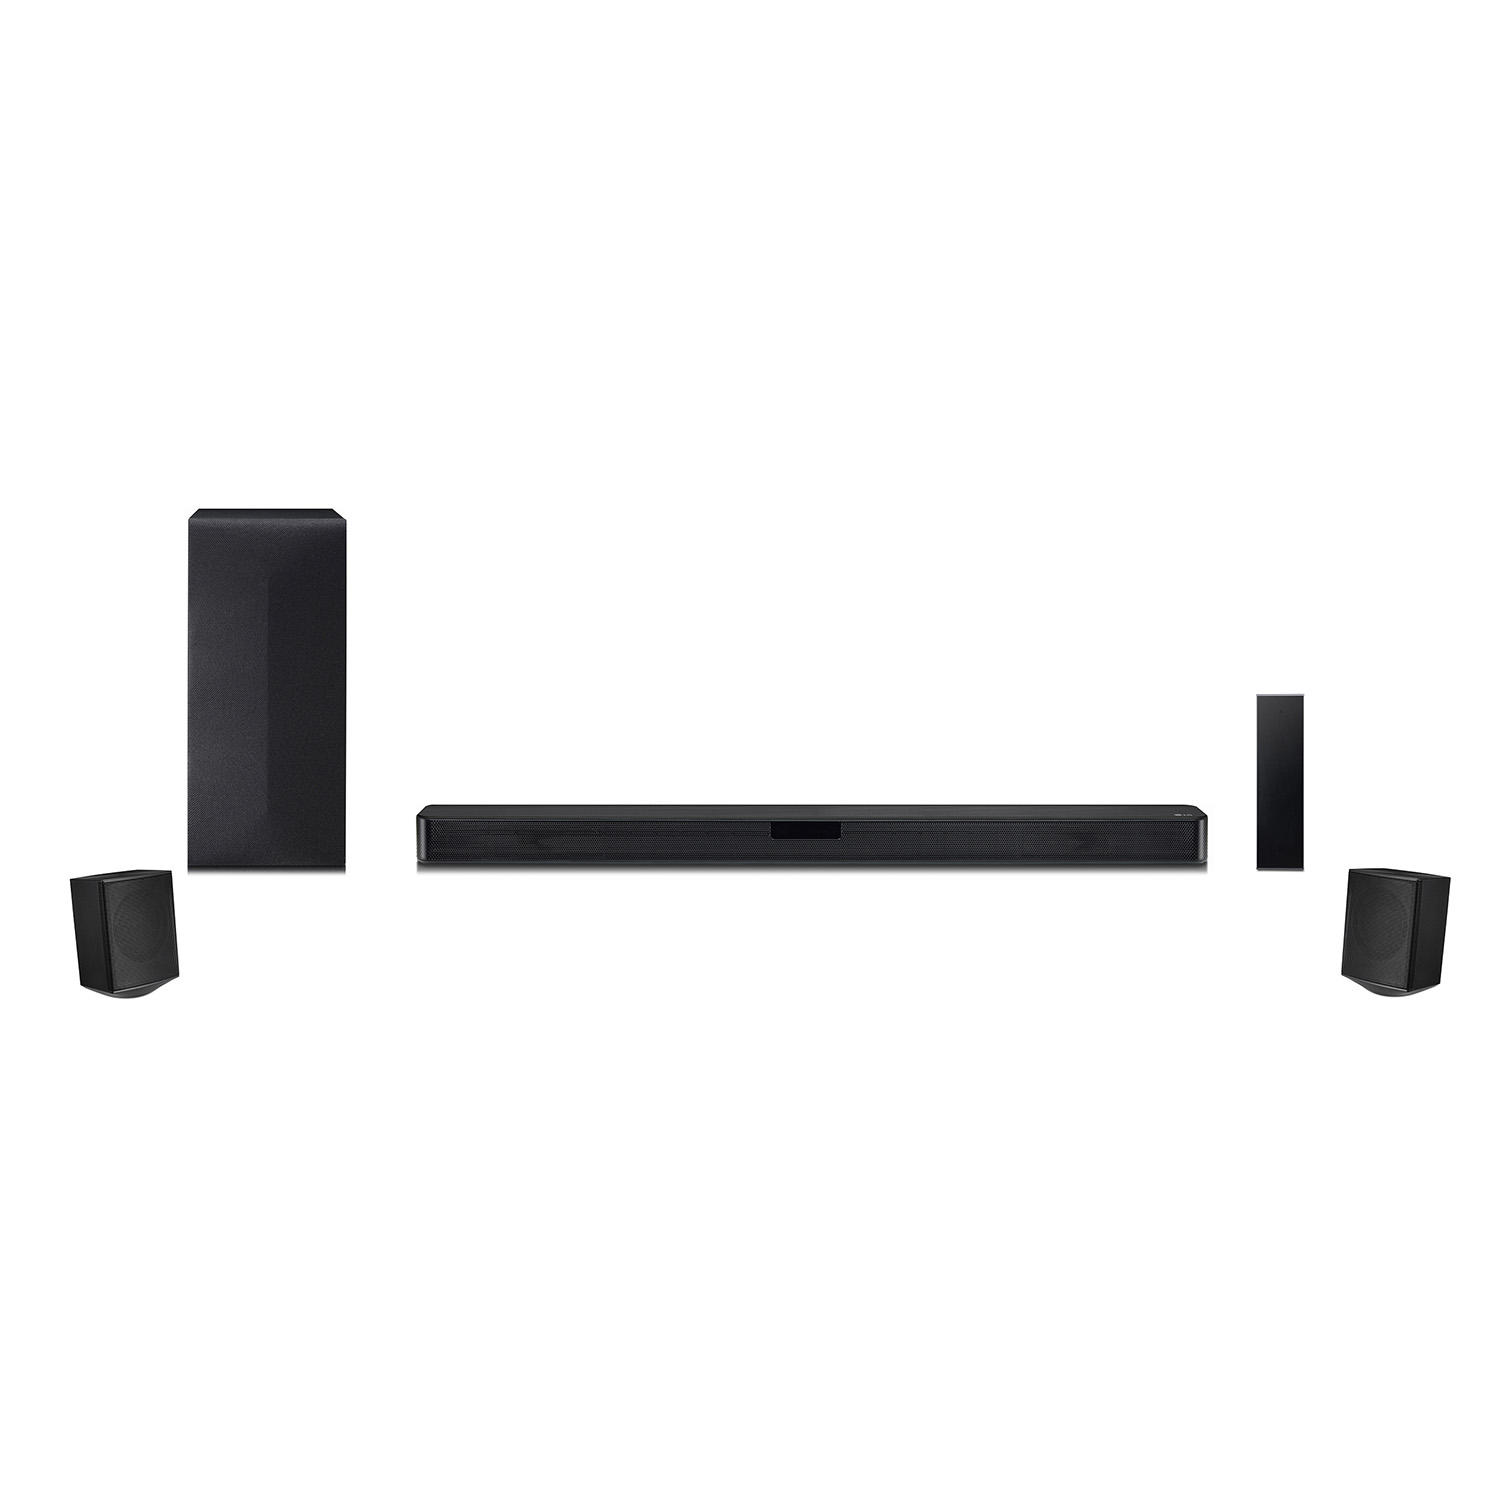 LG SNC4R 4.1 Channel Soundbar with Surround Sound Speakers